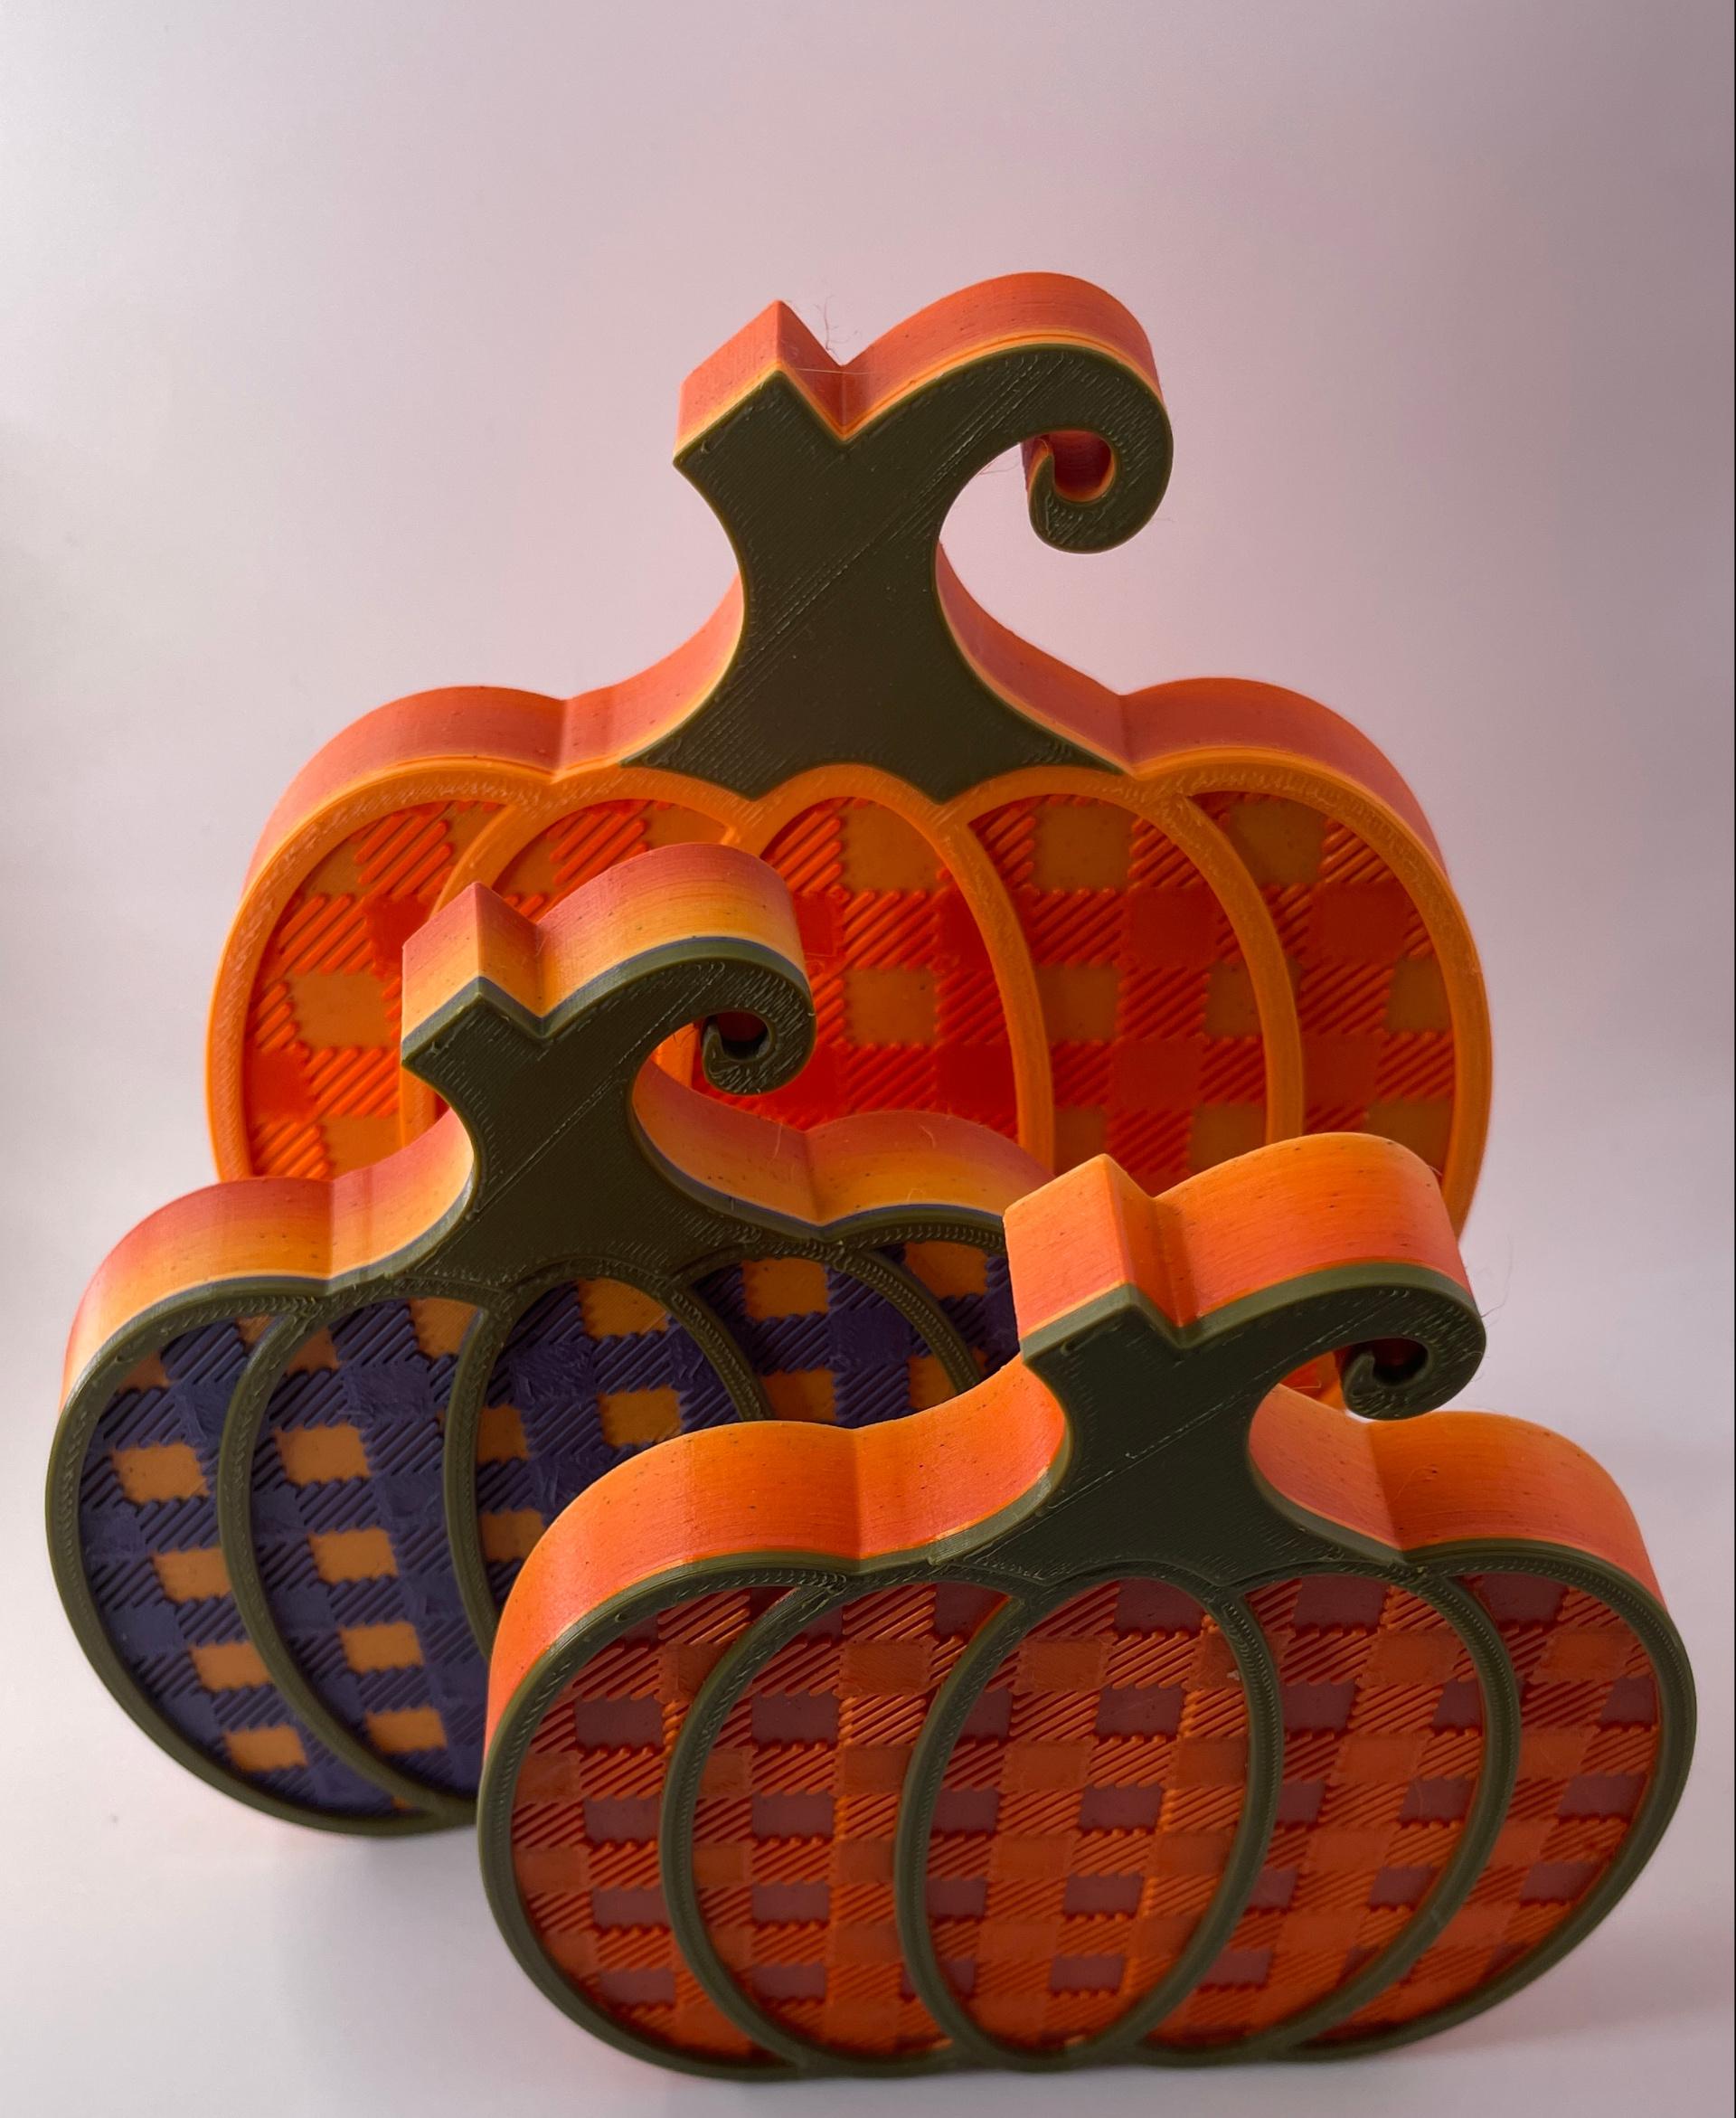 Gingham Pattern Fall Pumpkin Decorations 3d model